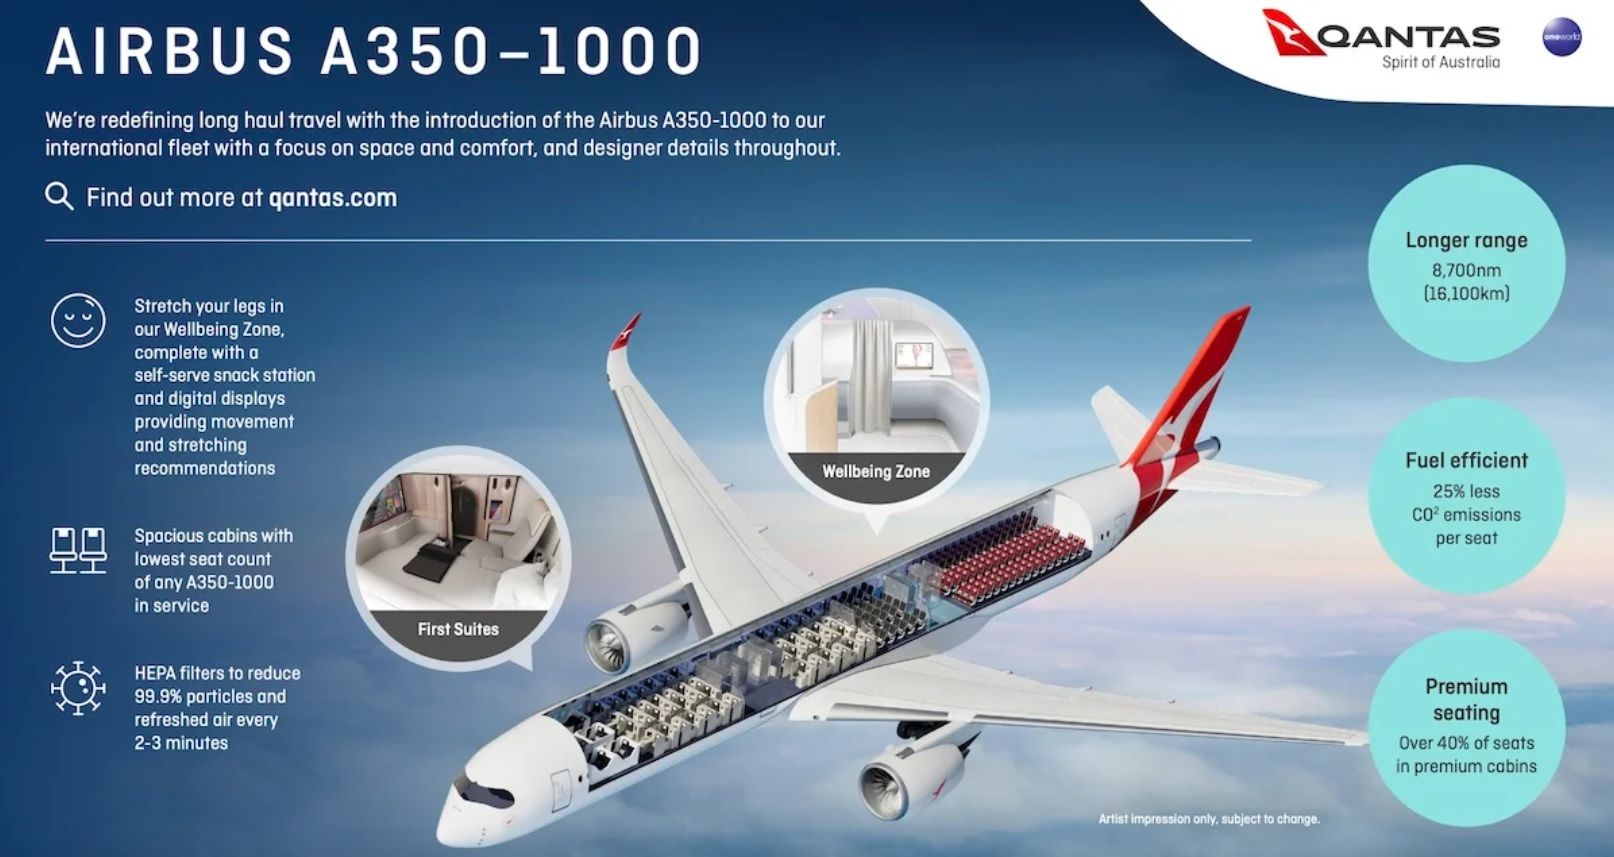 Qantas' A350-1000s